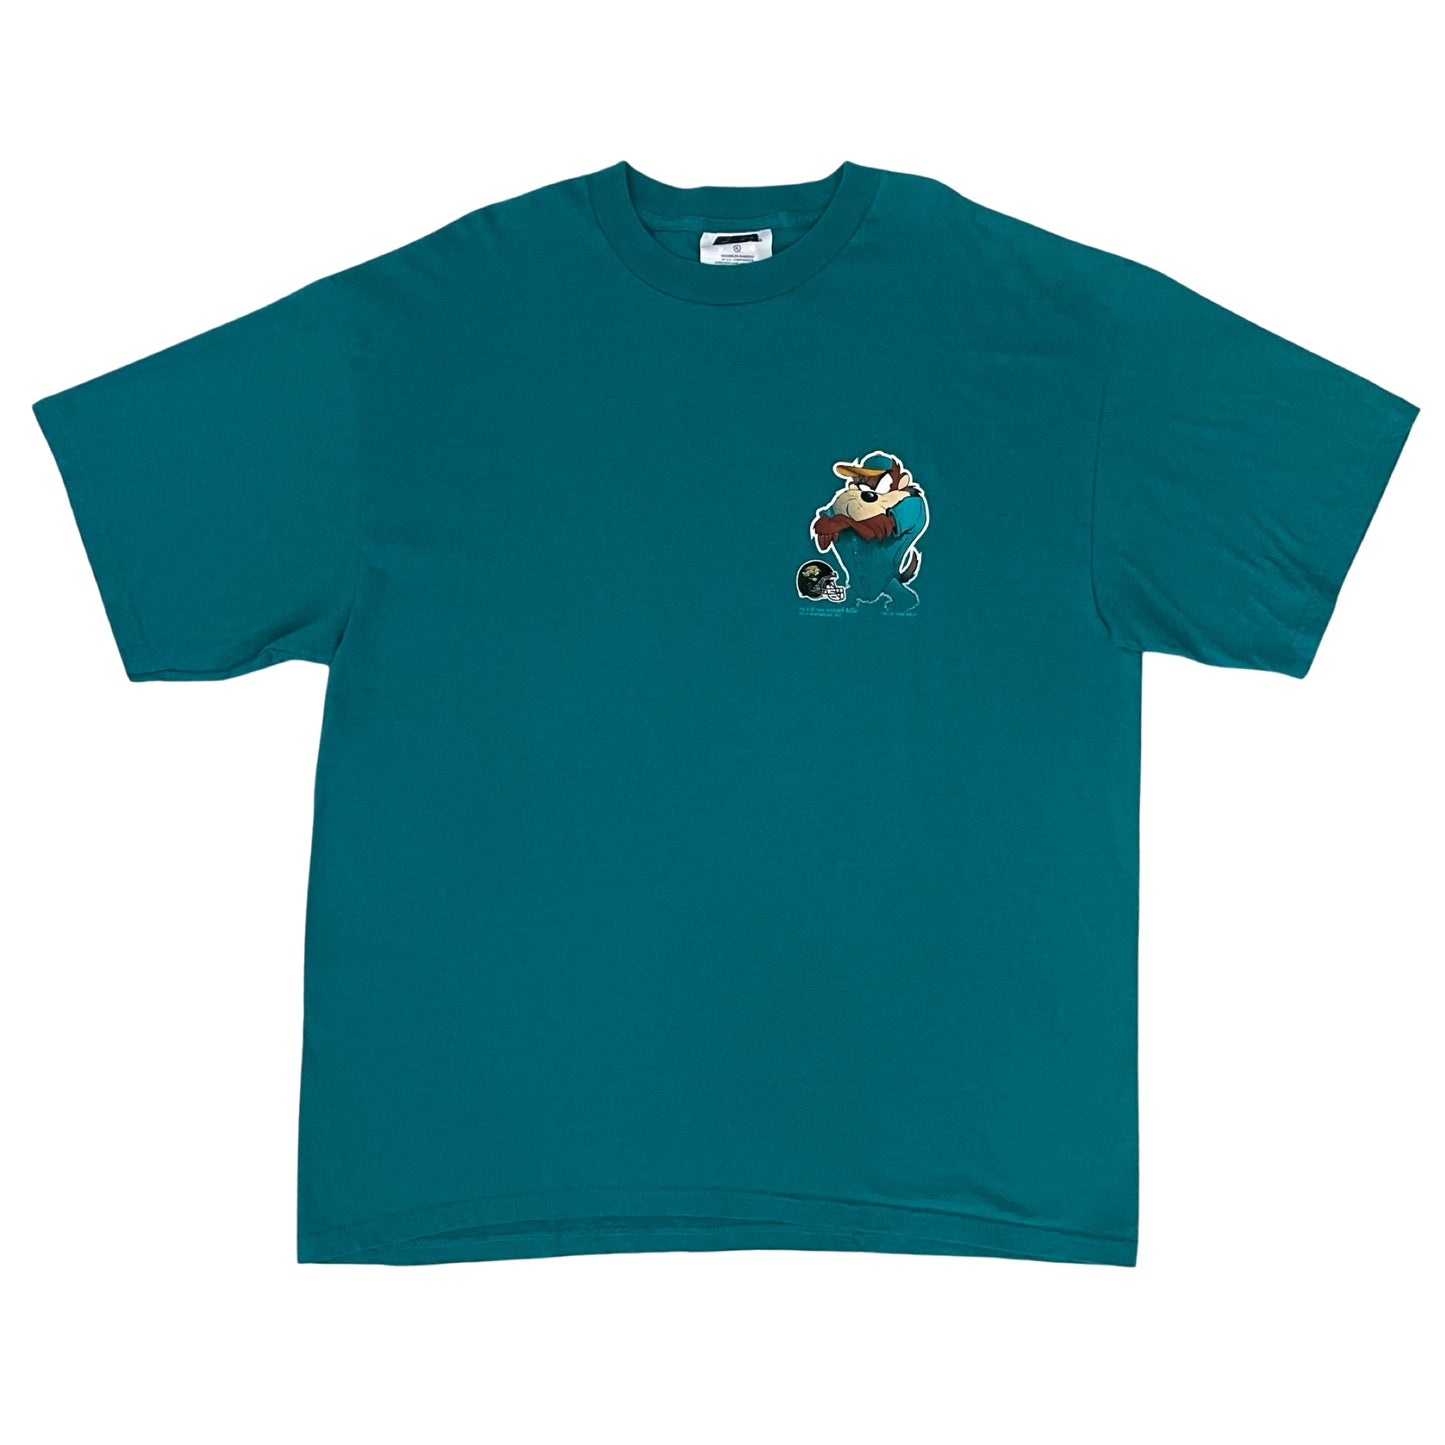 Vintage Jacksonville Jaguars 1999 Taz Looney Tunes shirt size XL